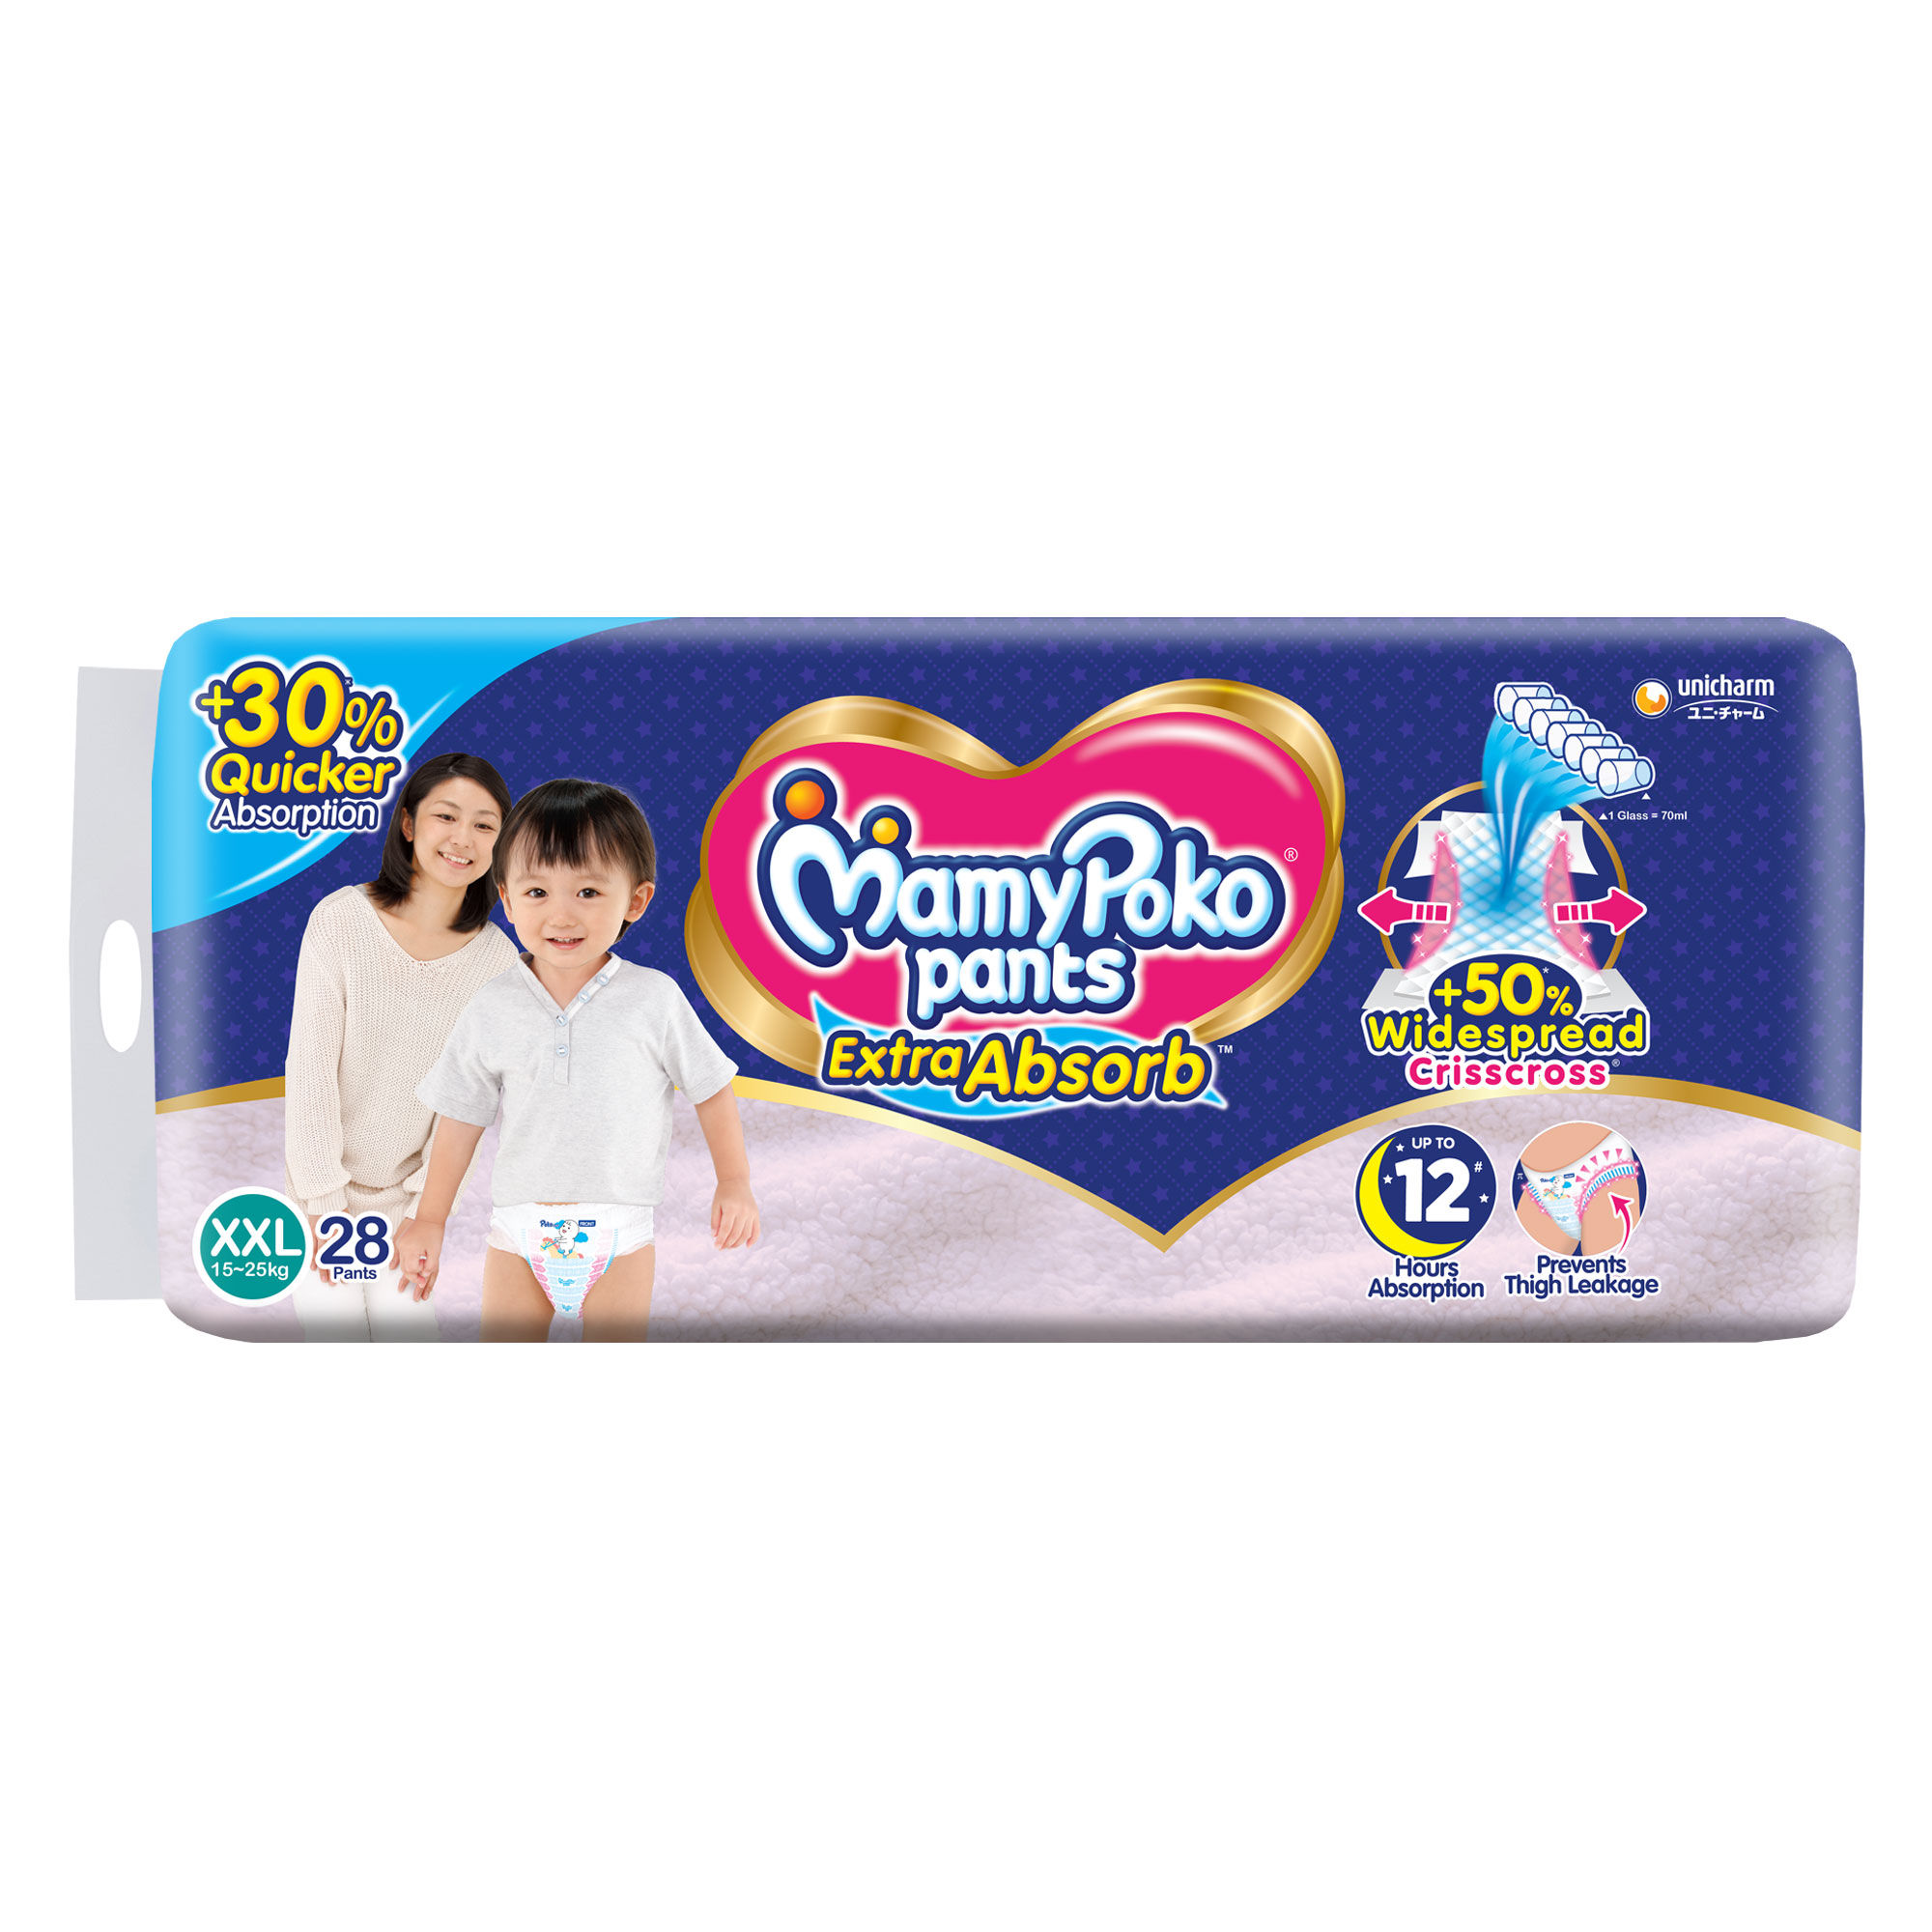 MamyPoko Pants Standard Diaper M 712 kg Price  Buy Online at 278 in  India